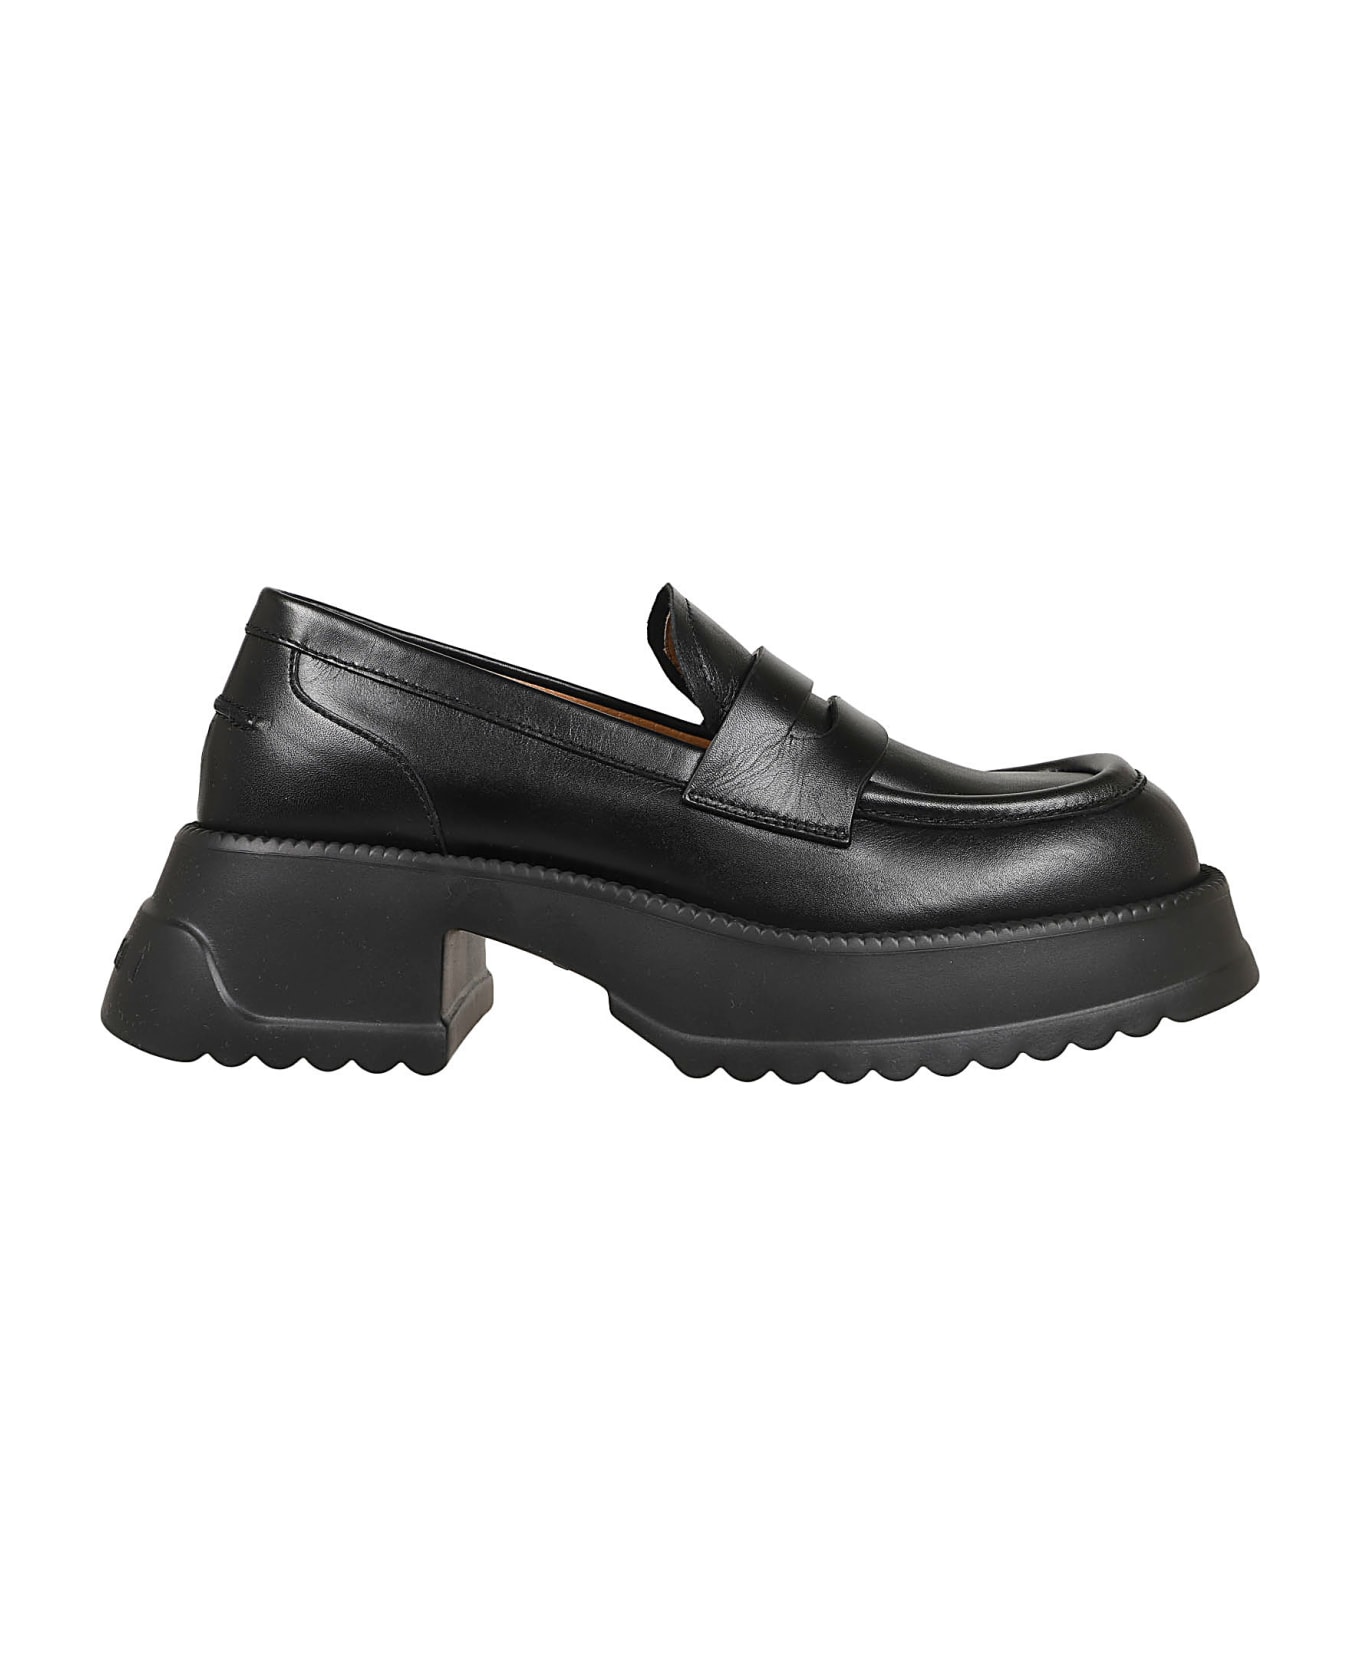 Marni Moccasin Shoe - Black